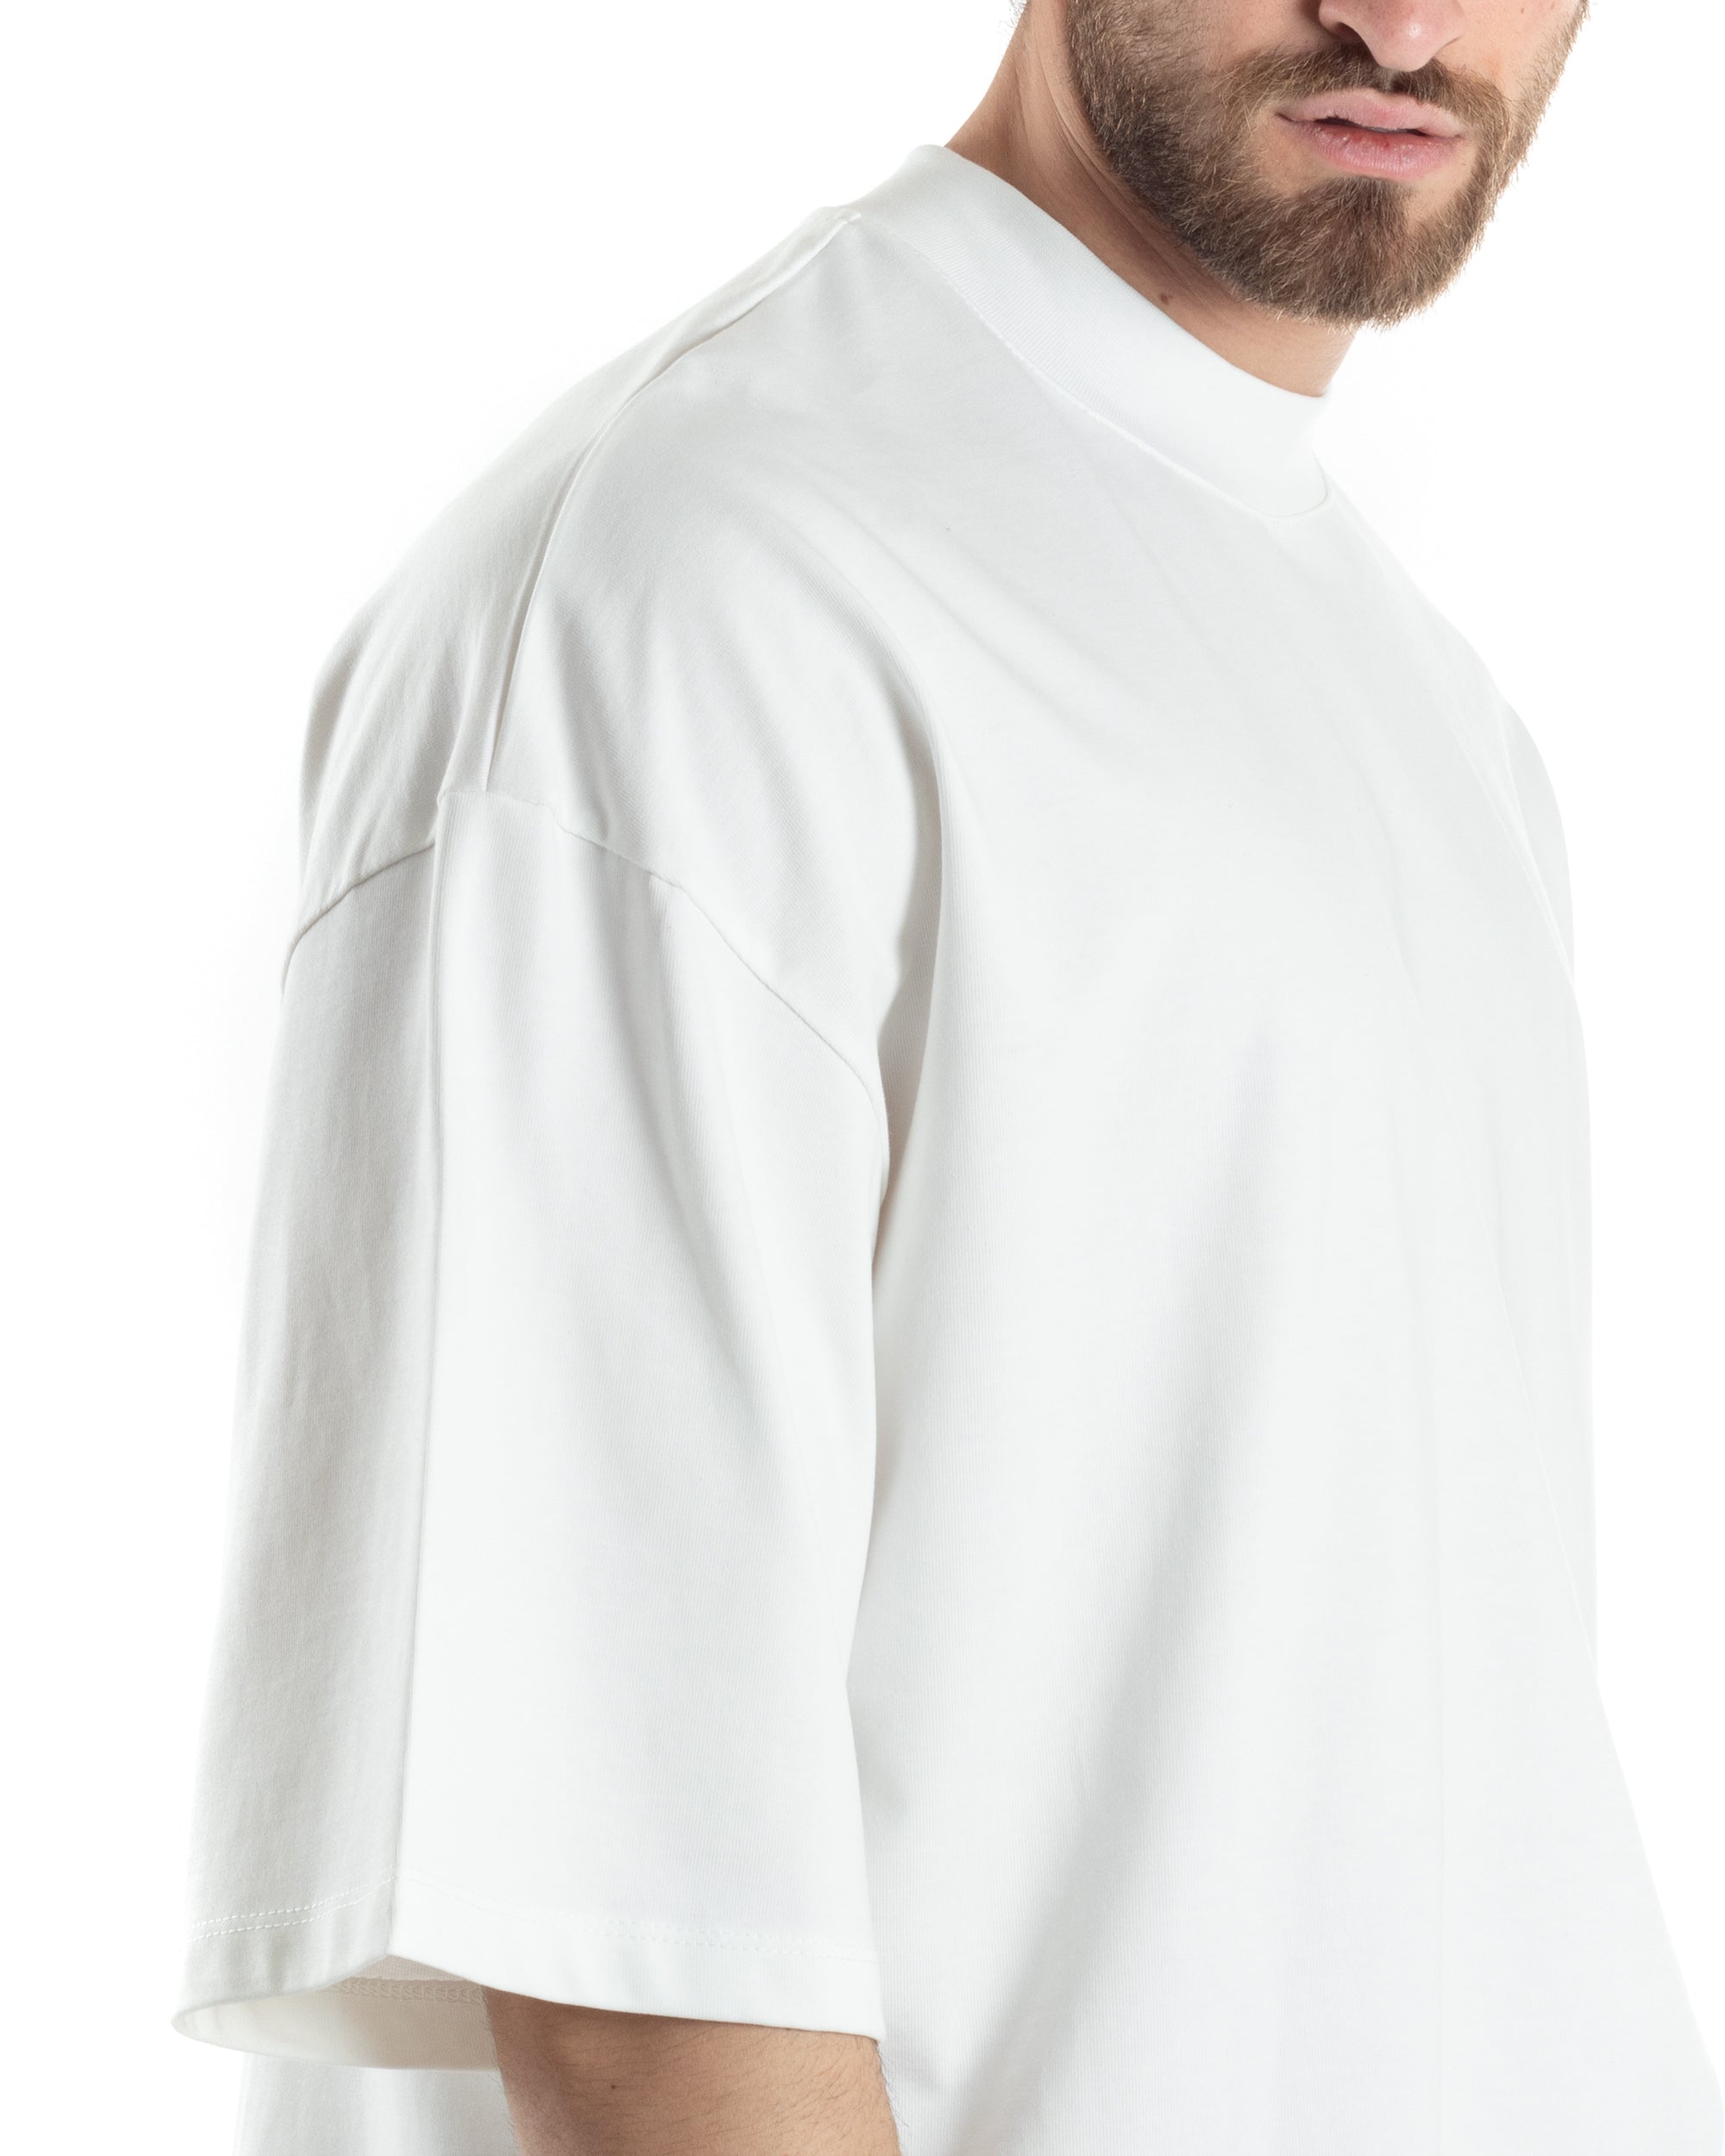 T-shirt Uomo Girocollo Boxy Fit Oversize Cotone Spalla Scesa Gola Alta Casual Basic Bianco GIOSAL-TS3024A